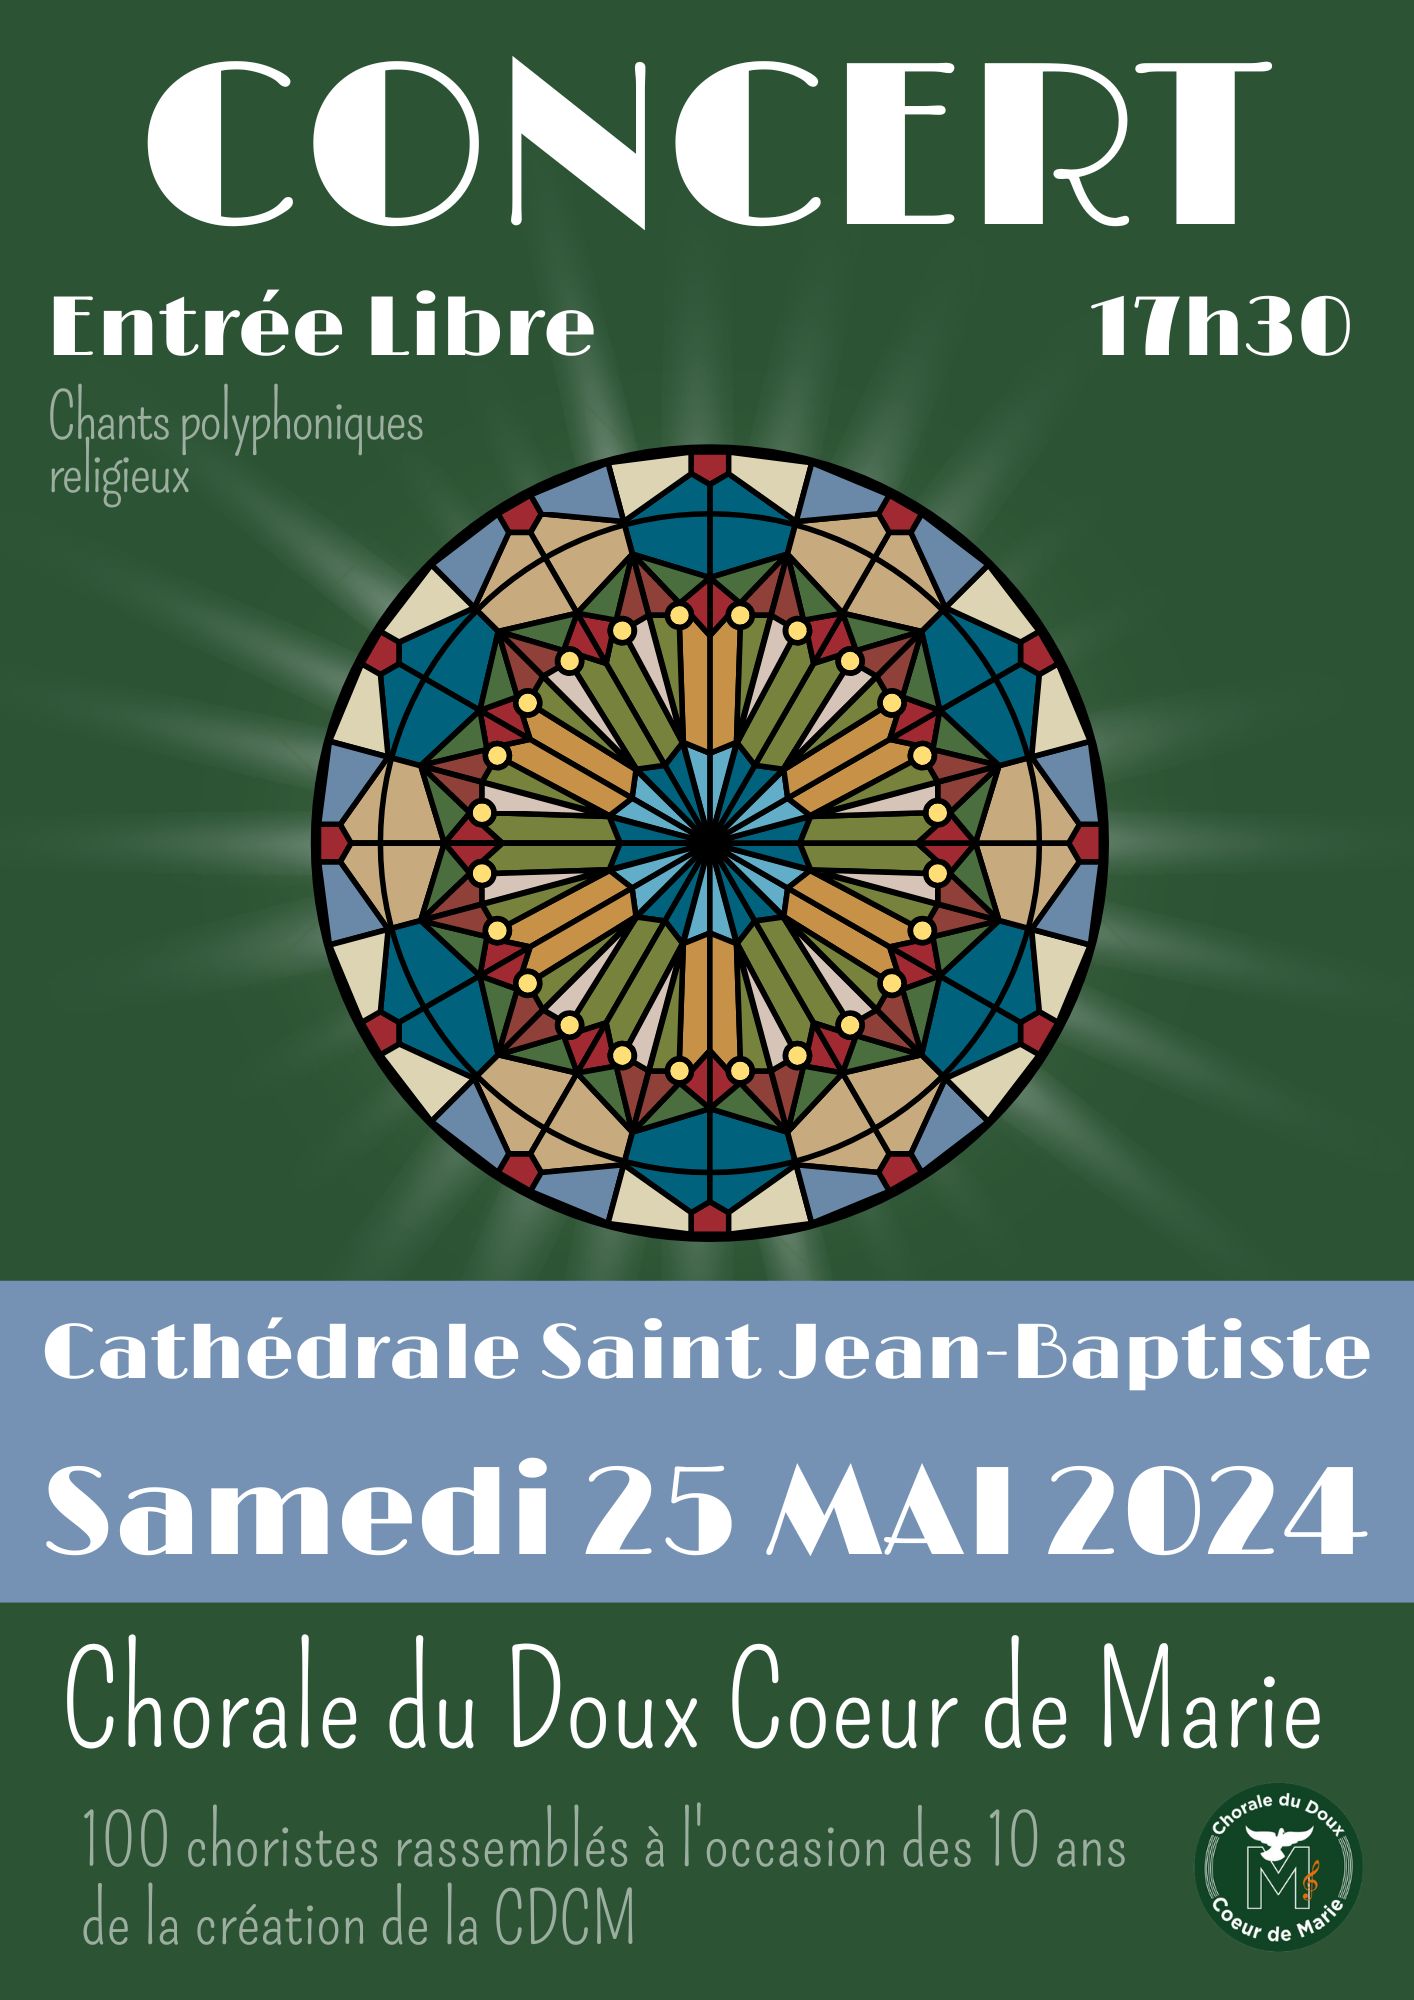 Concert : Chorale du Doux Coeur de Marie - Samedi 2 mai à 17h30